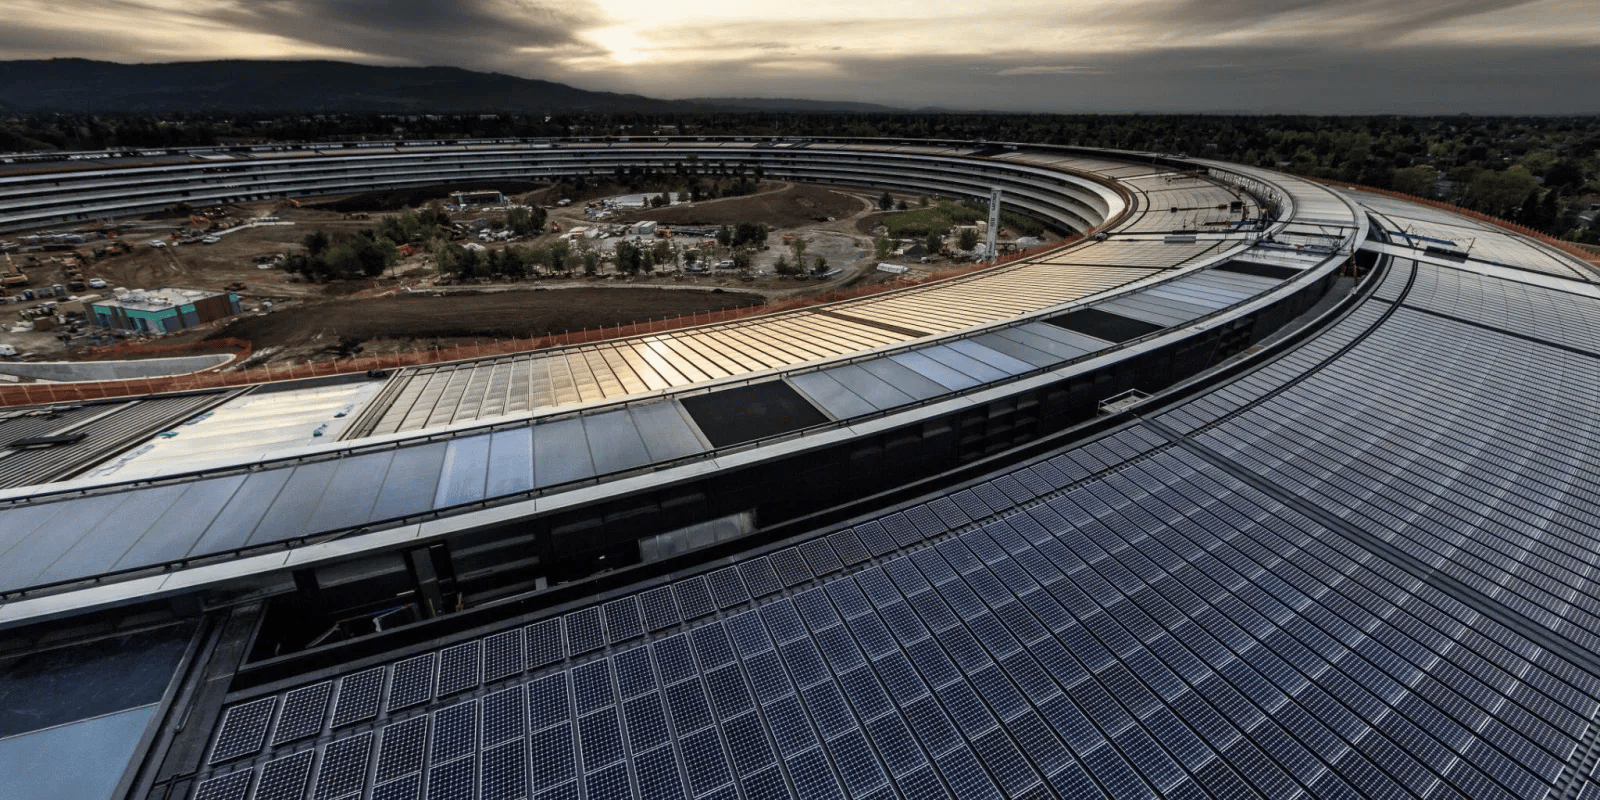 The massive solar installation at Apple's new headquarters